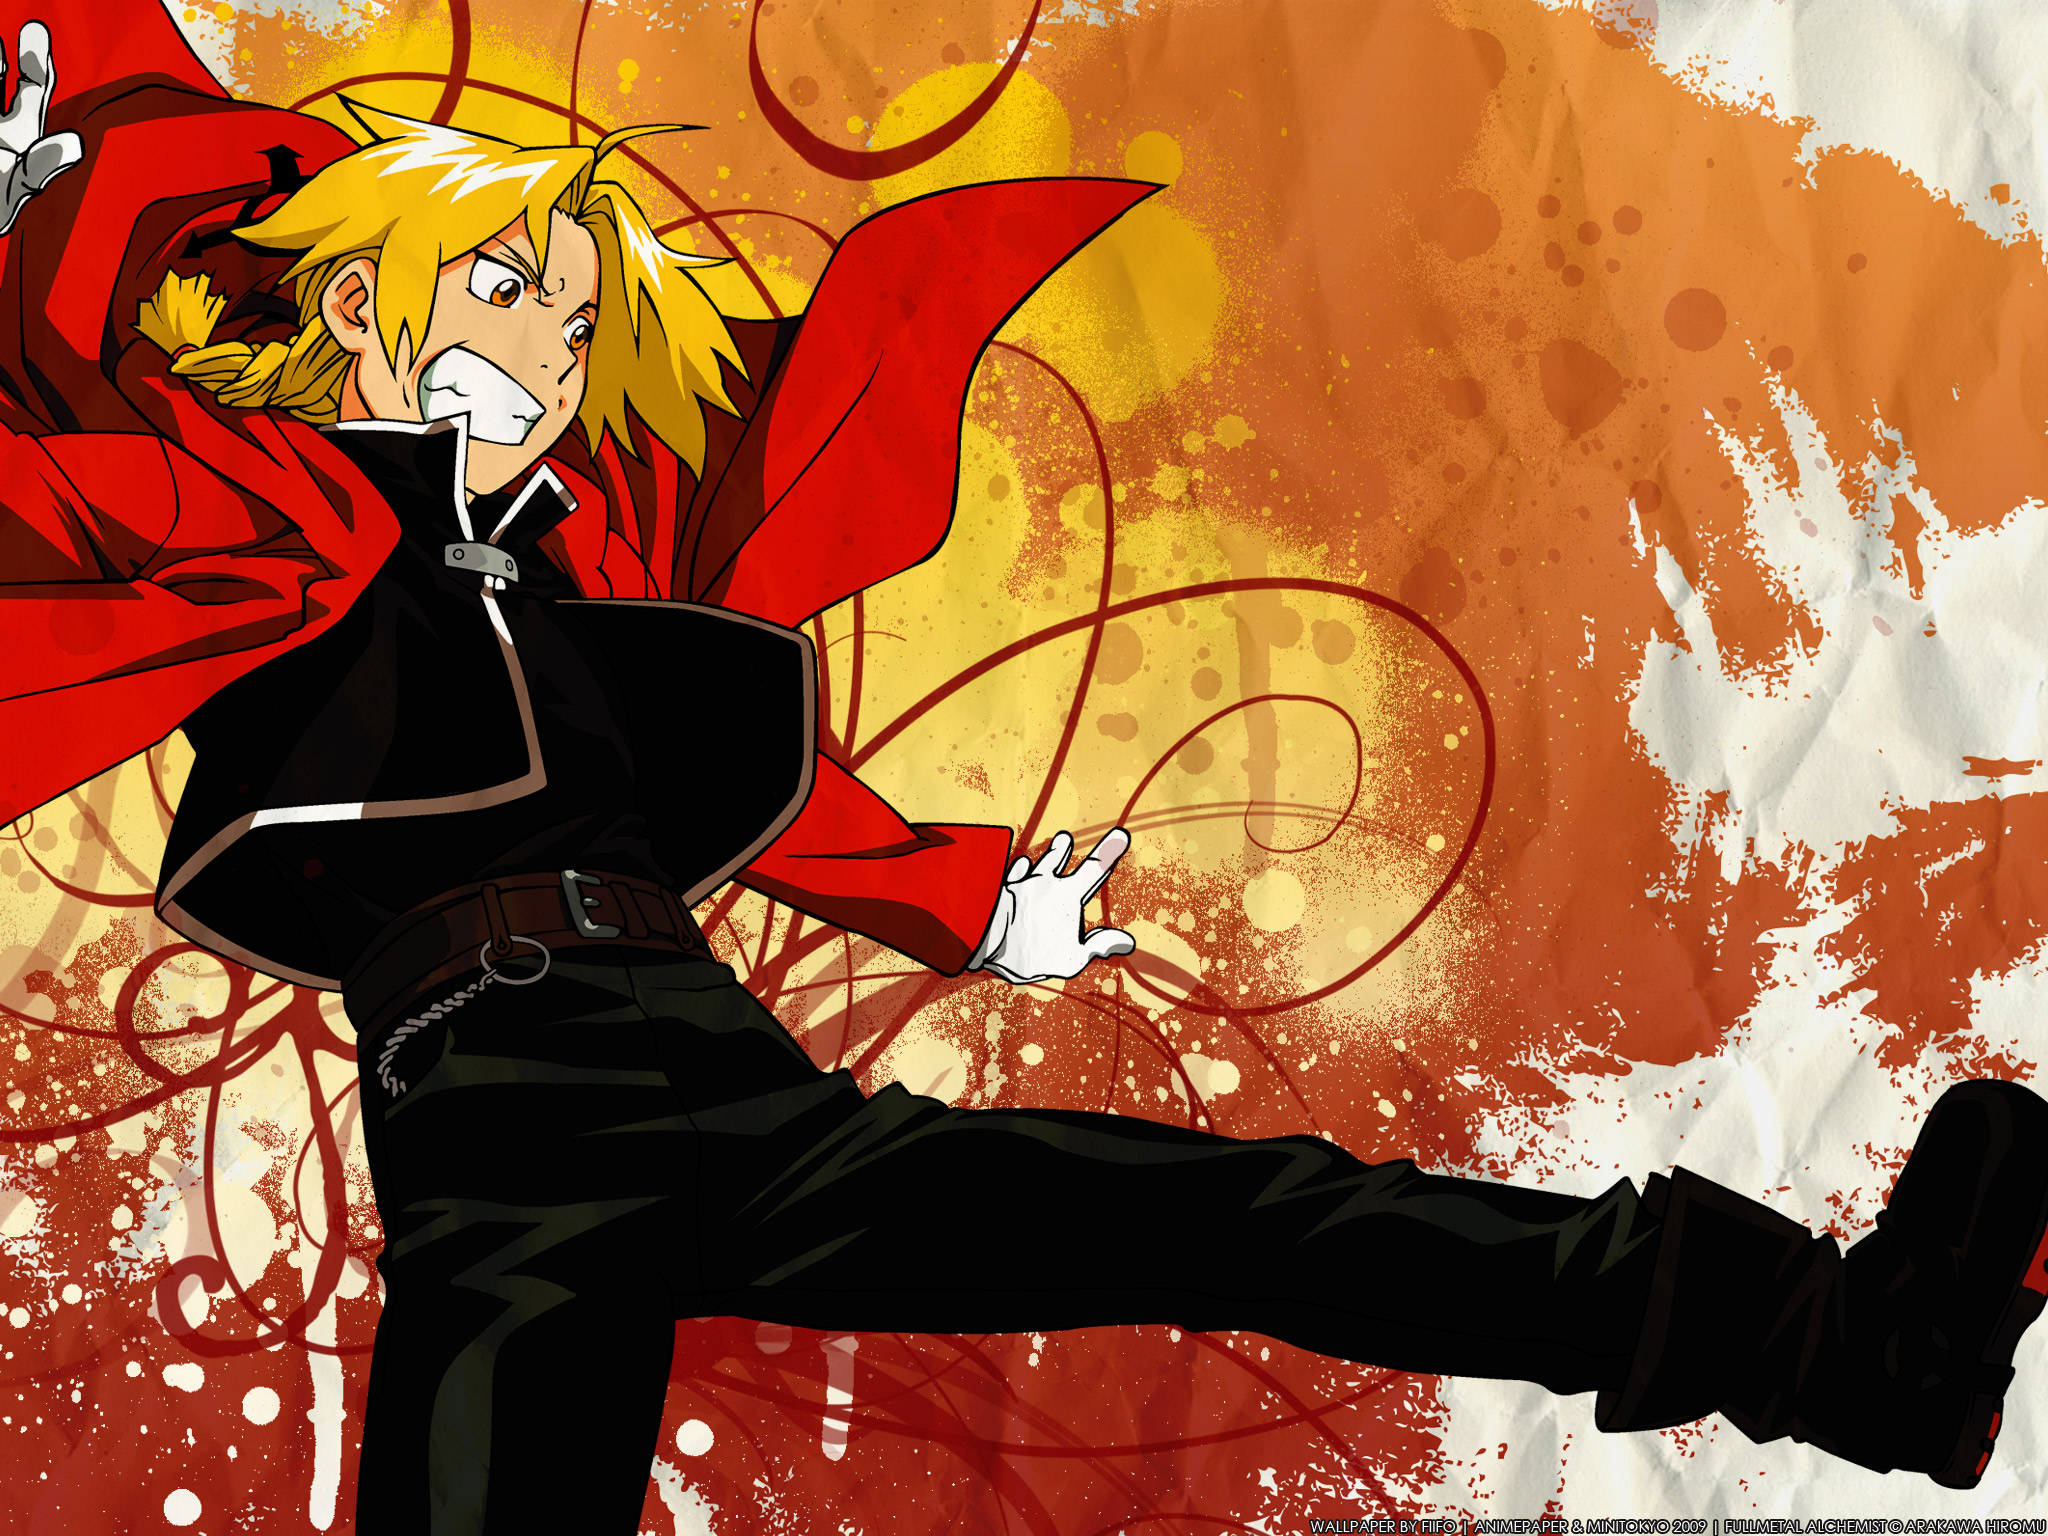 Anime character Edward Elric from FullMetal Alchemist in a desktop wallpaper image.